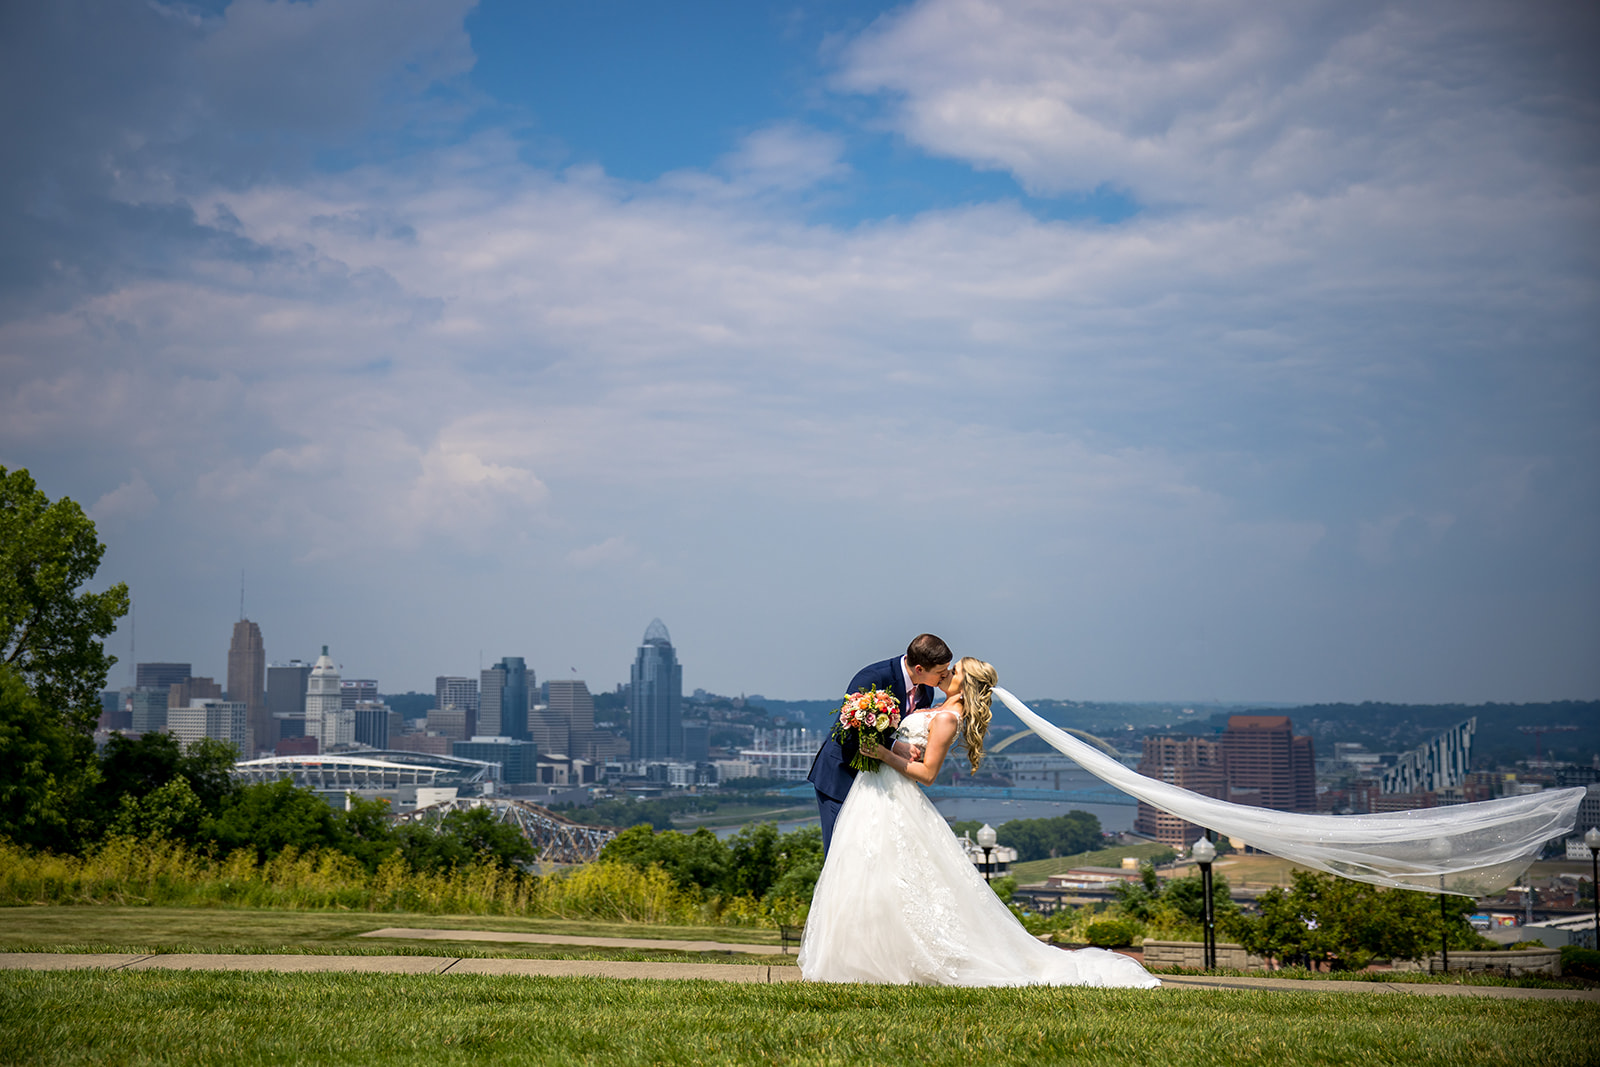 Wedding couple poses in front of Cincinnati Skyline